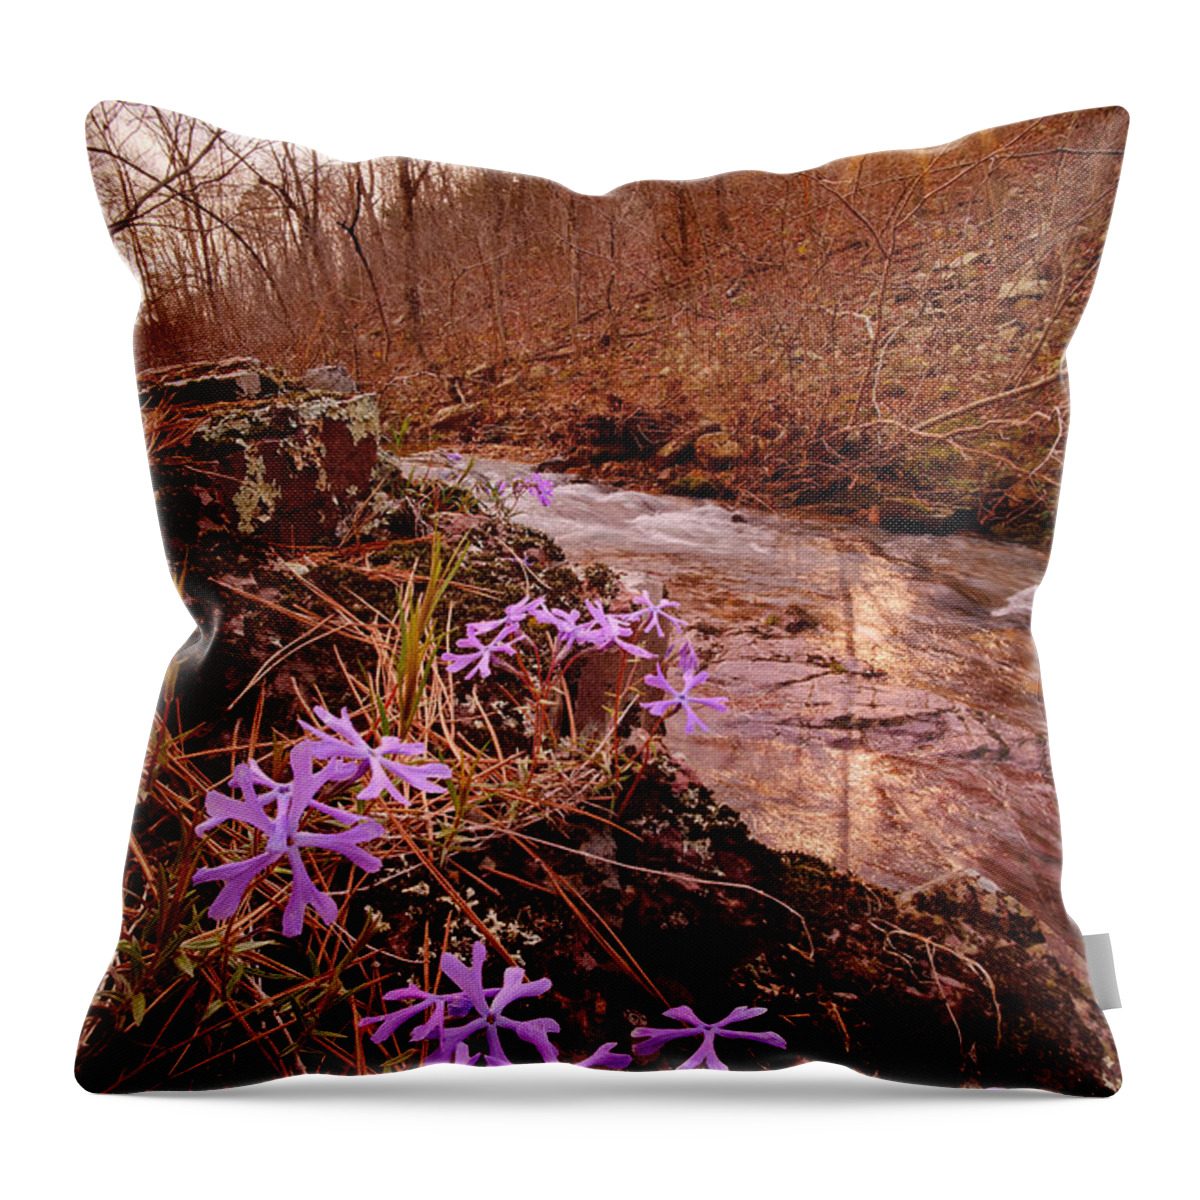 Flowers Throw Pillow featuring the photograph Bell Mountain Wilderness, Missouri. Shut-ins Creek Hike. by Robert Charity